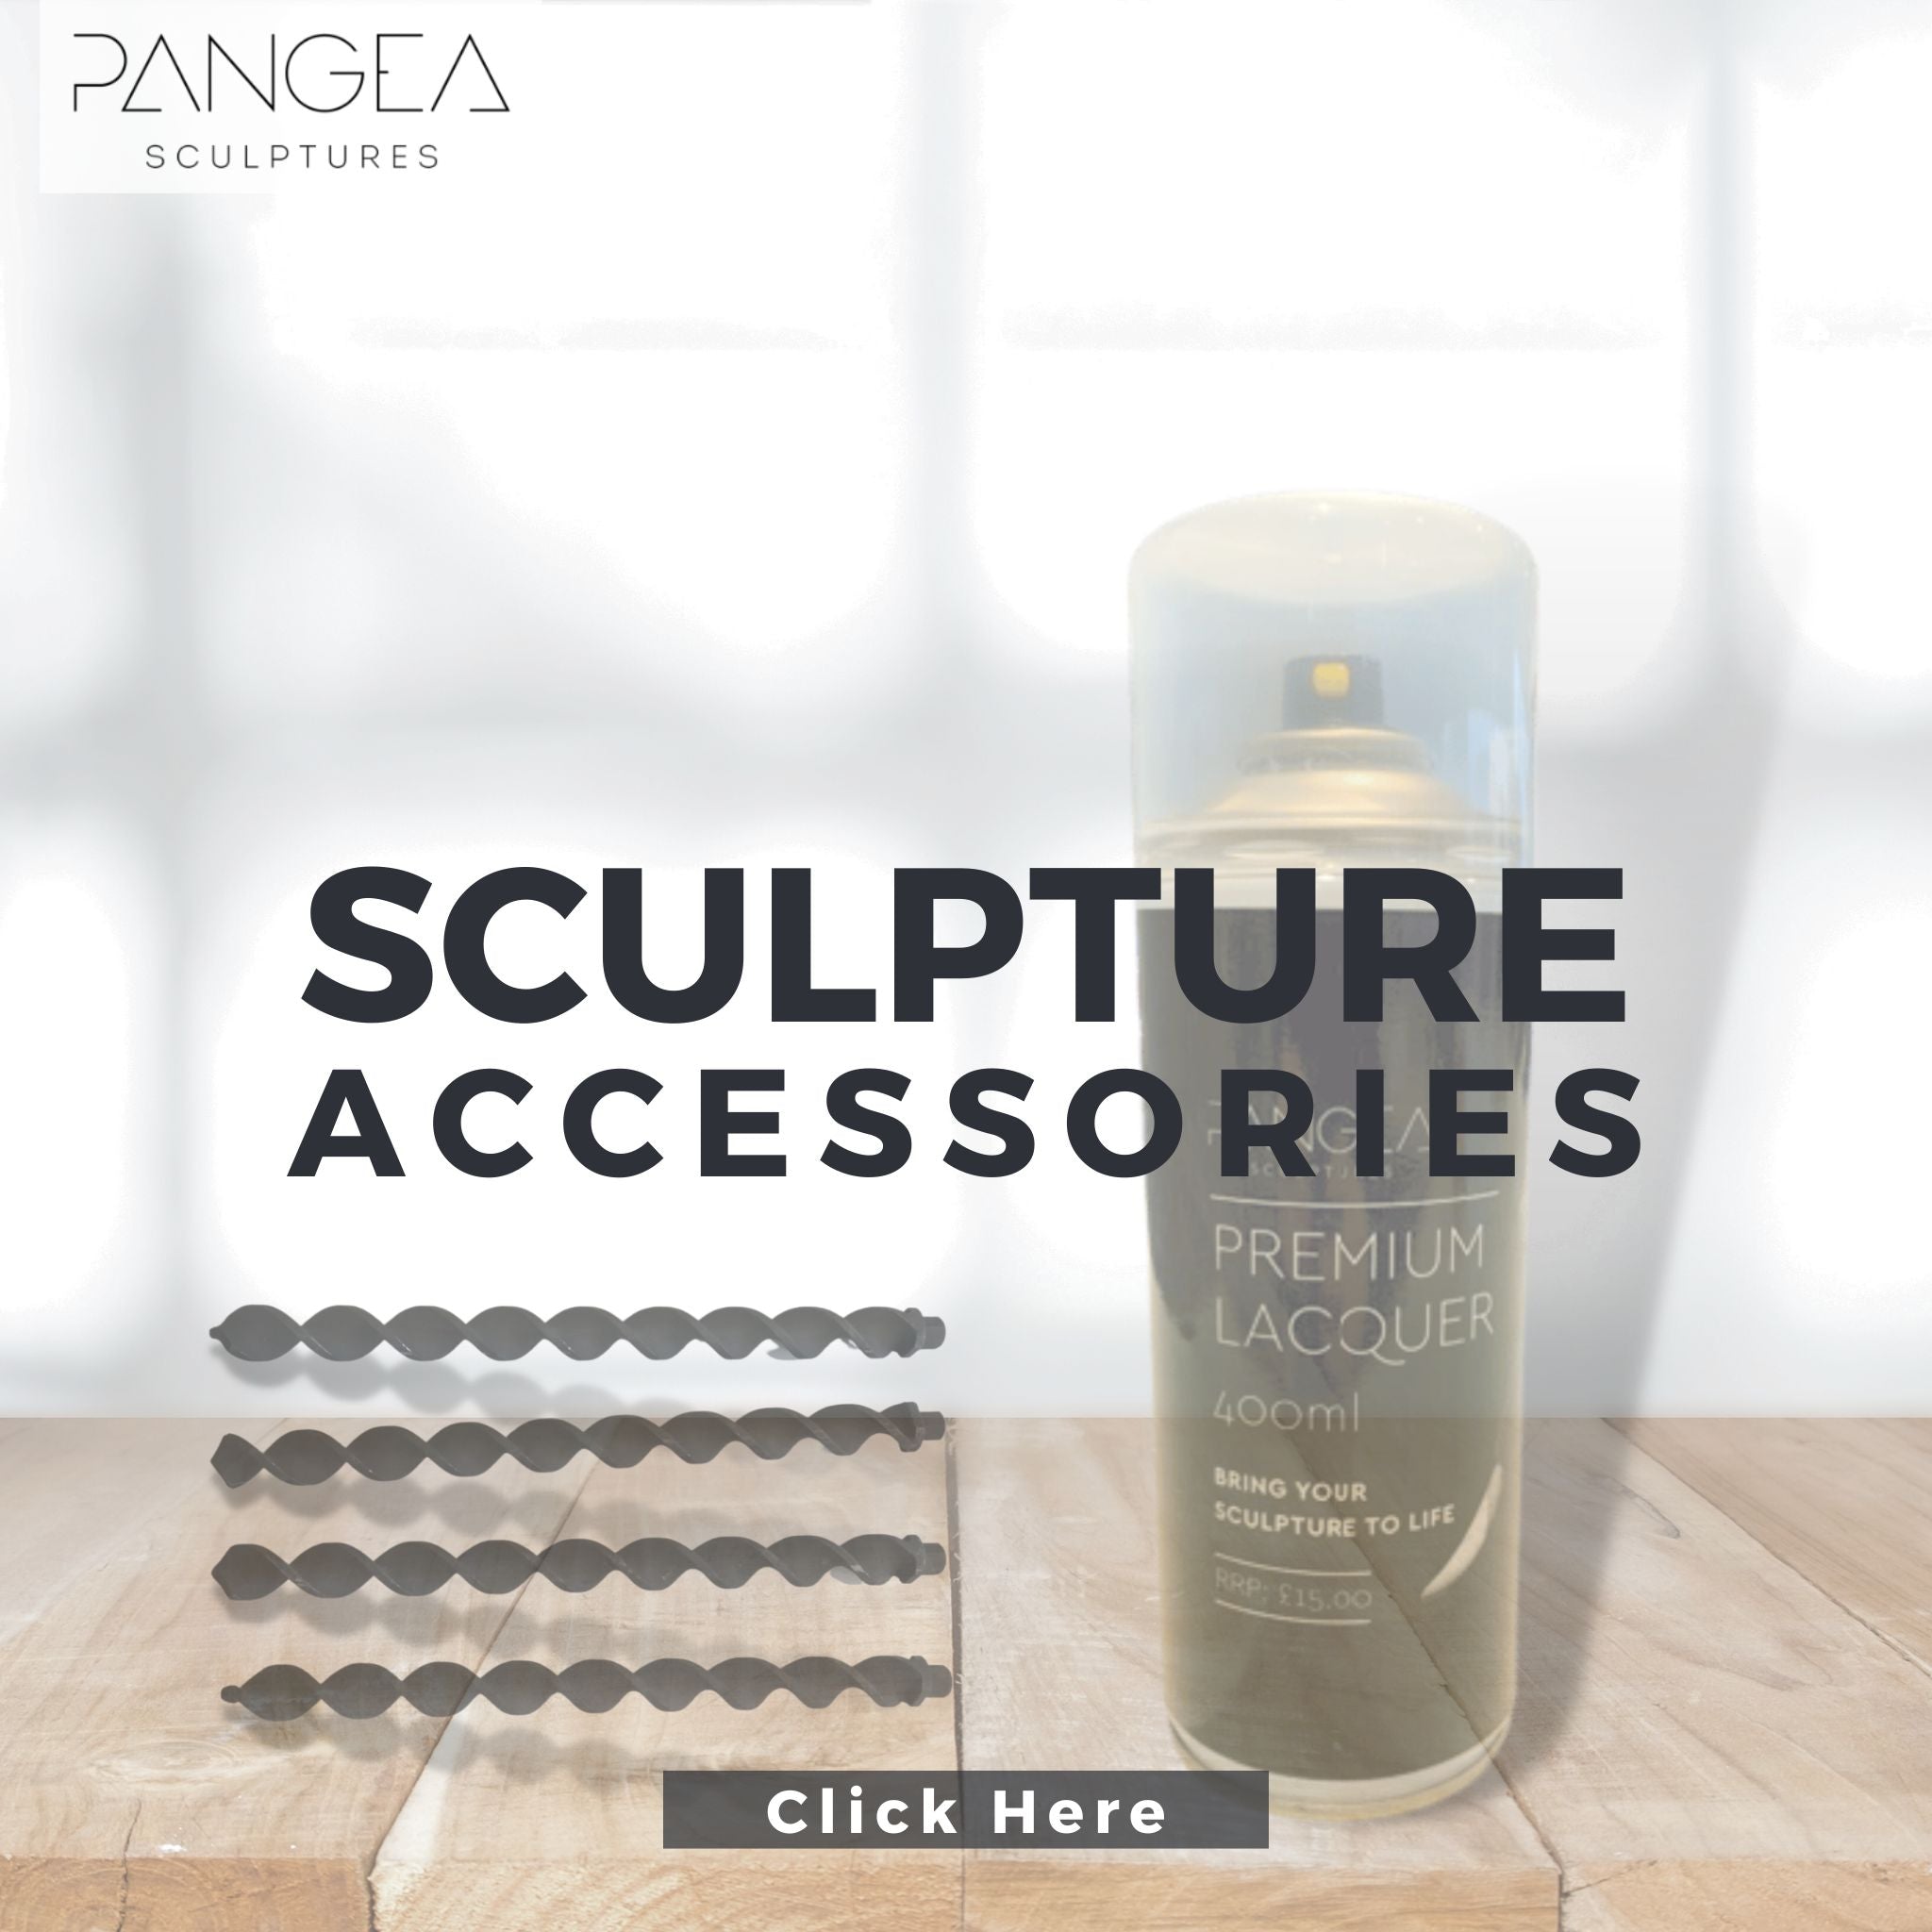 Sculpture Accessory's - Pangea Sculptures